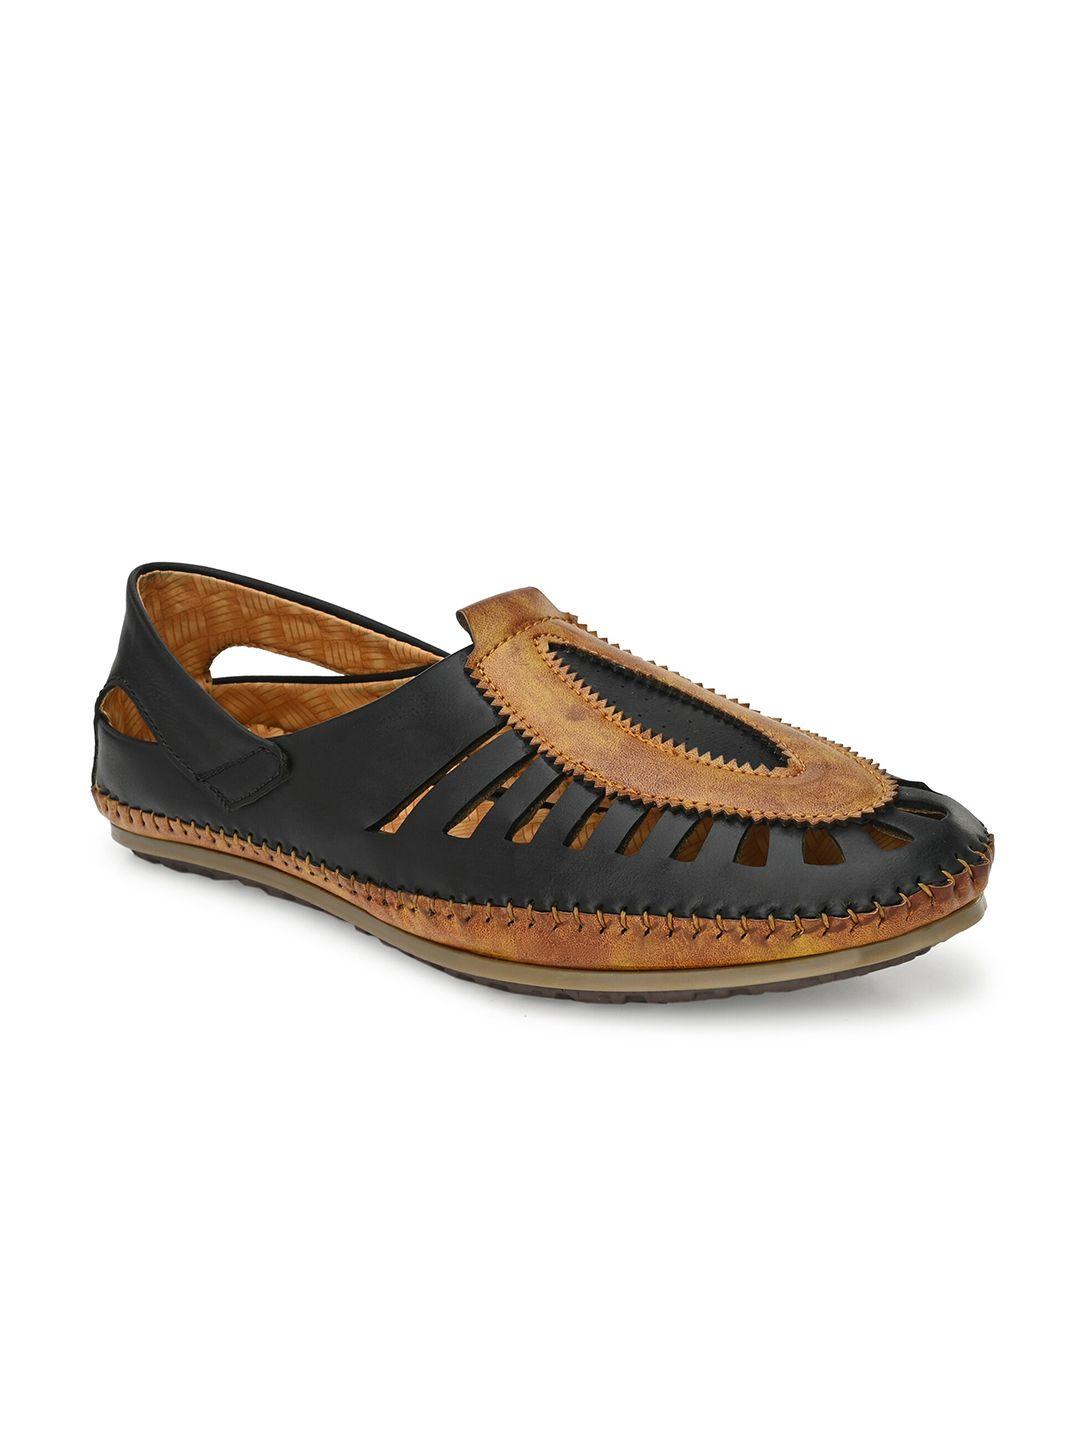 eego italy men brown & black shoe-style sandals